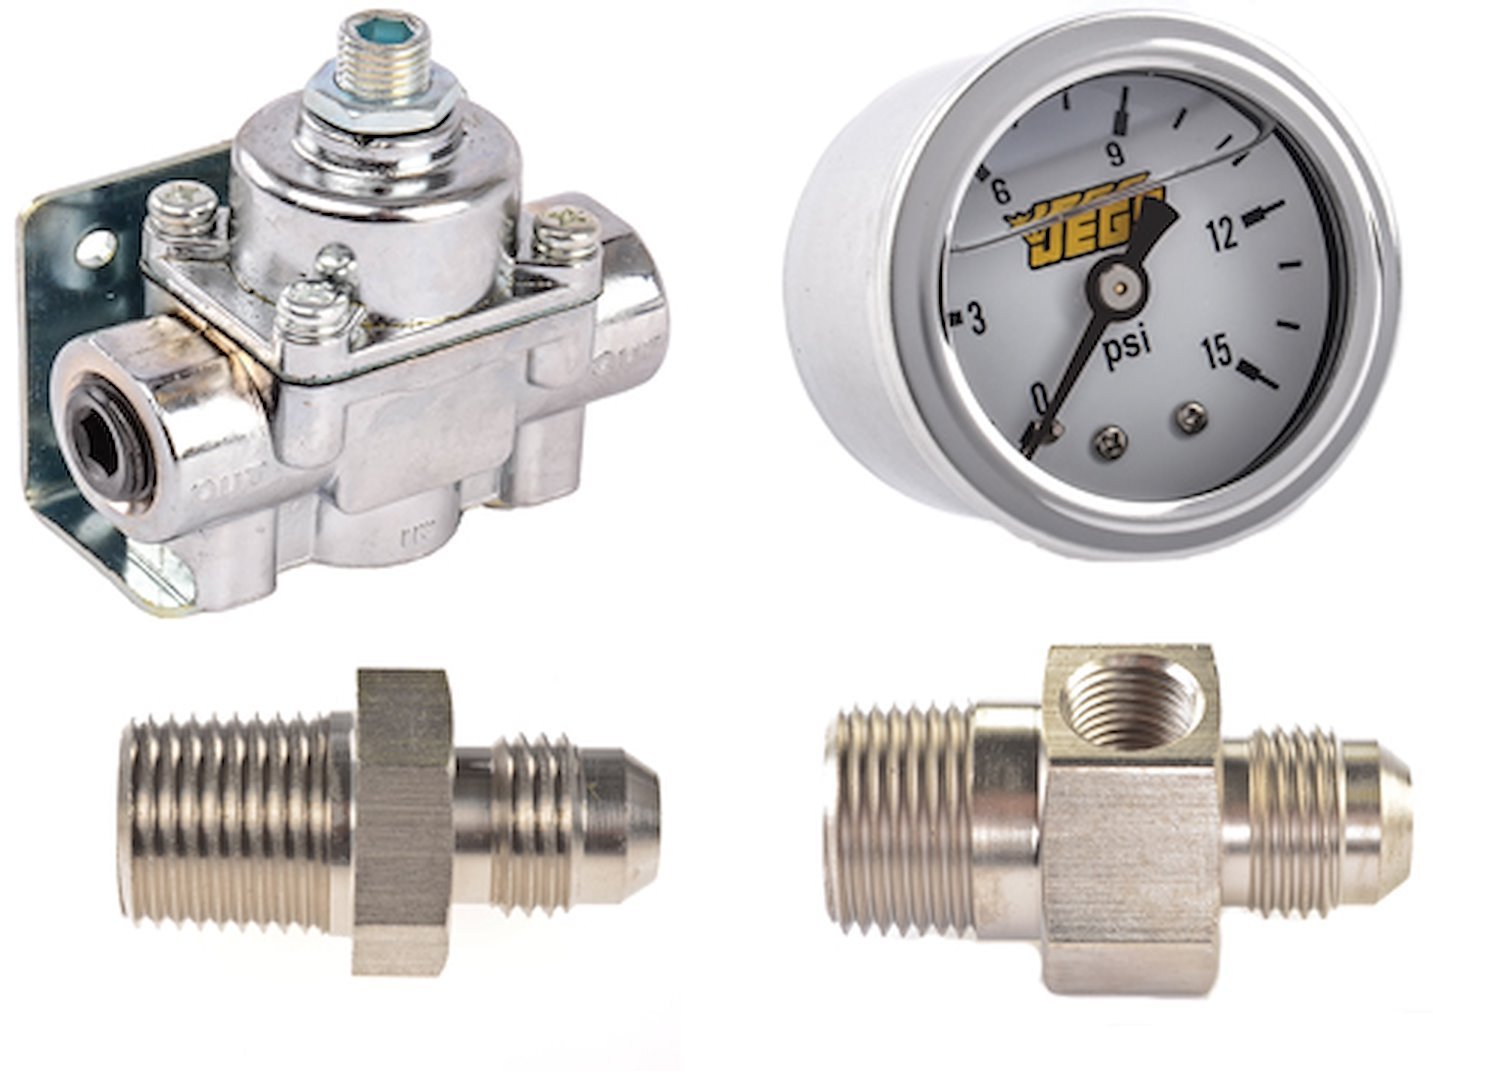 Fuel Pressure Regulator and Gauge Kit Gasoline 4.5 to 9 PSI